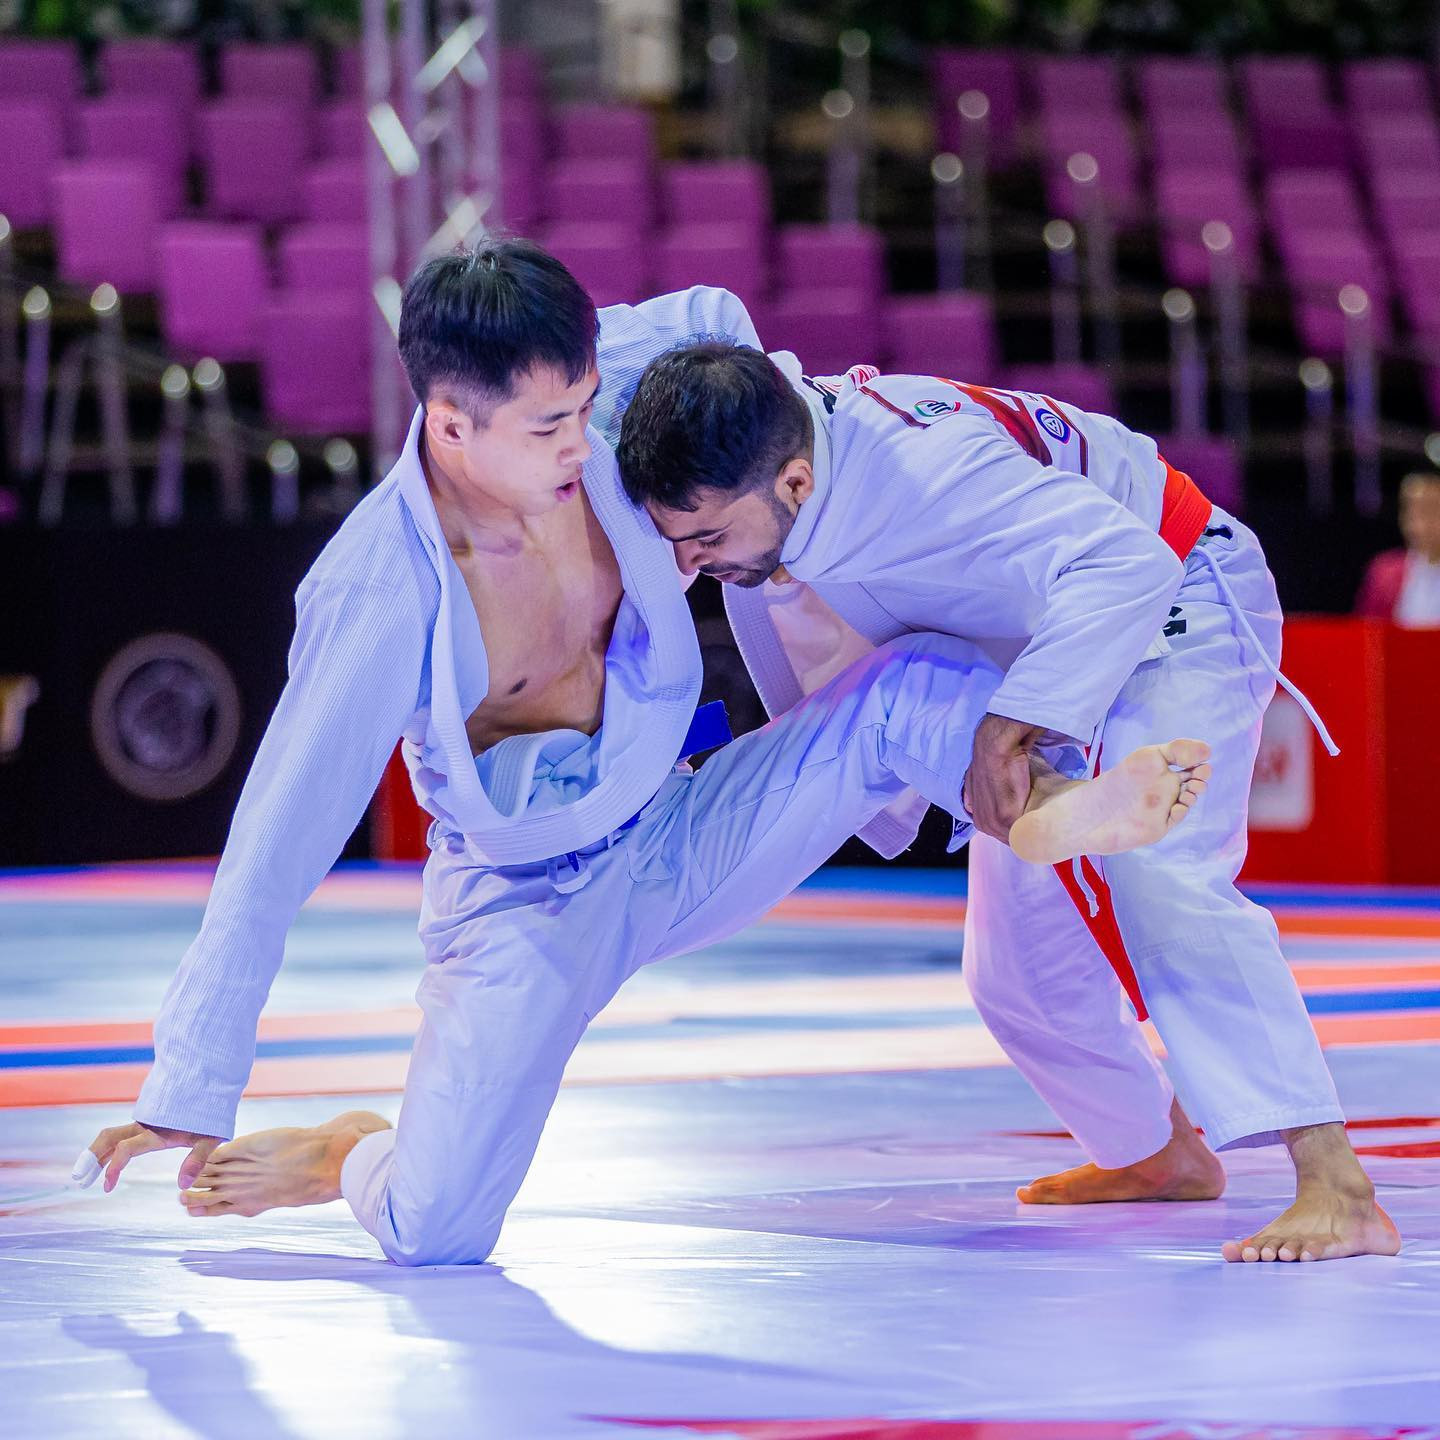 Despite ju-jitsu originating in Japan, the country was not represented at the Asian Championships in Bangkok ©JJAU